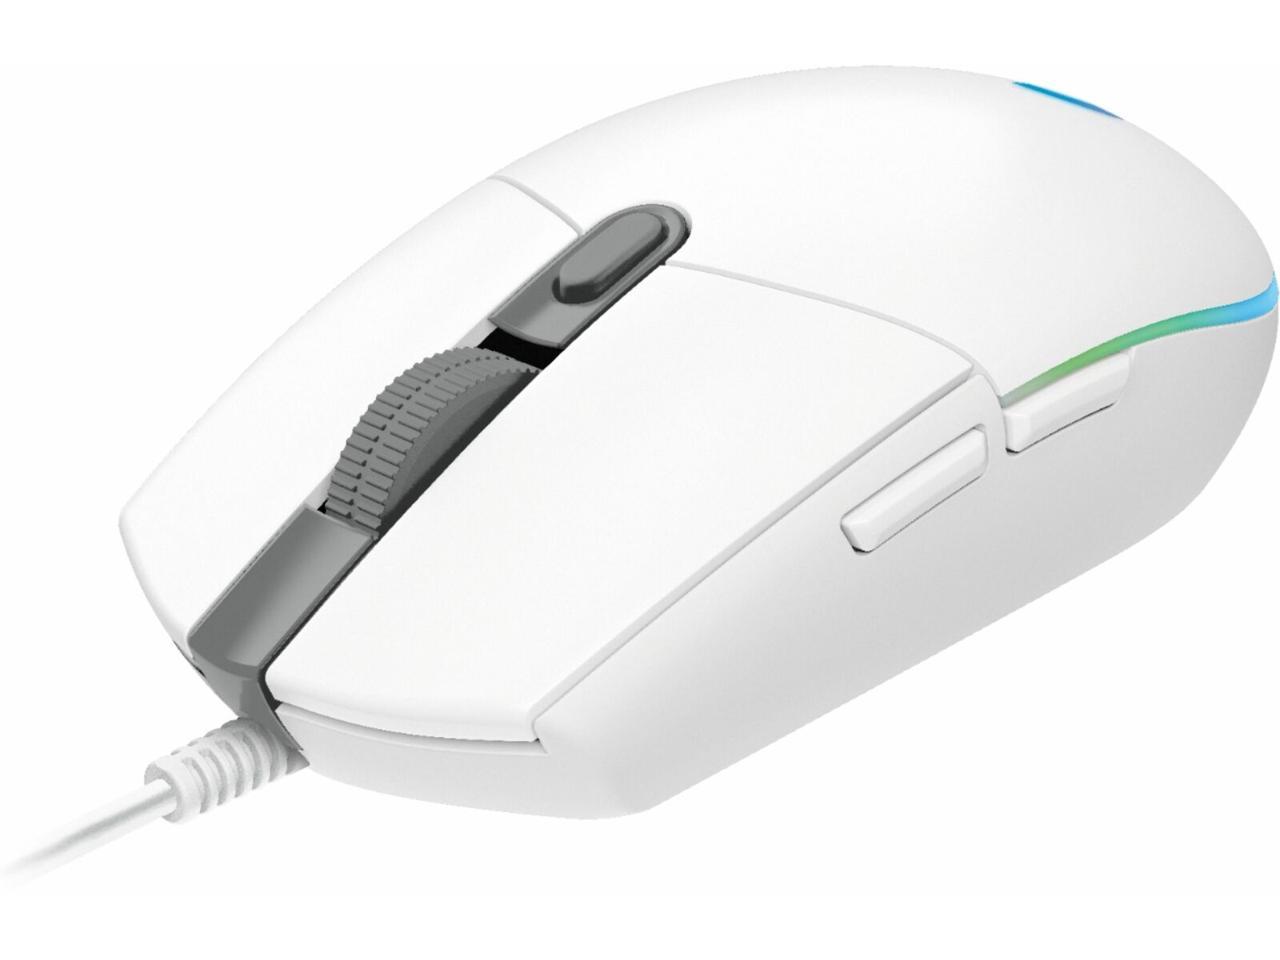 Logitech G304 LightSpeed Wireless Gaming Mouse